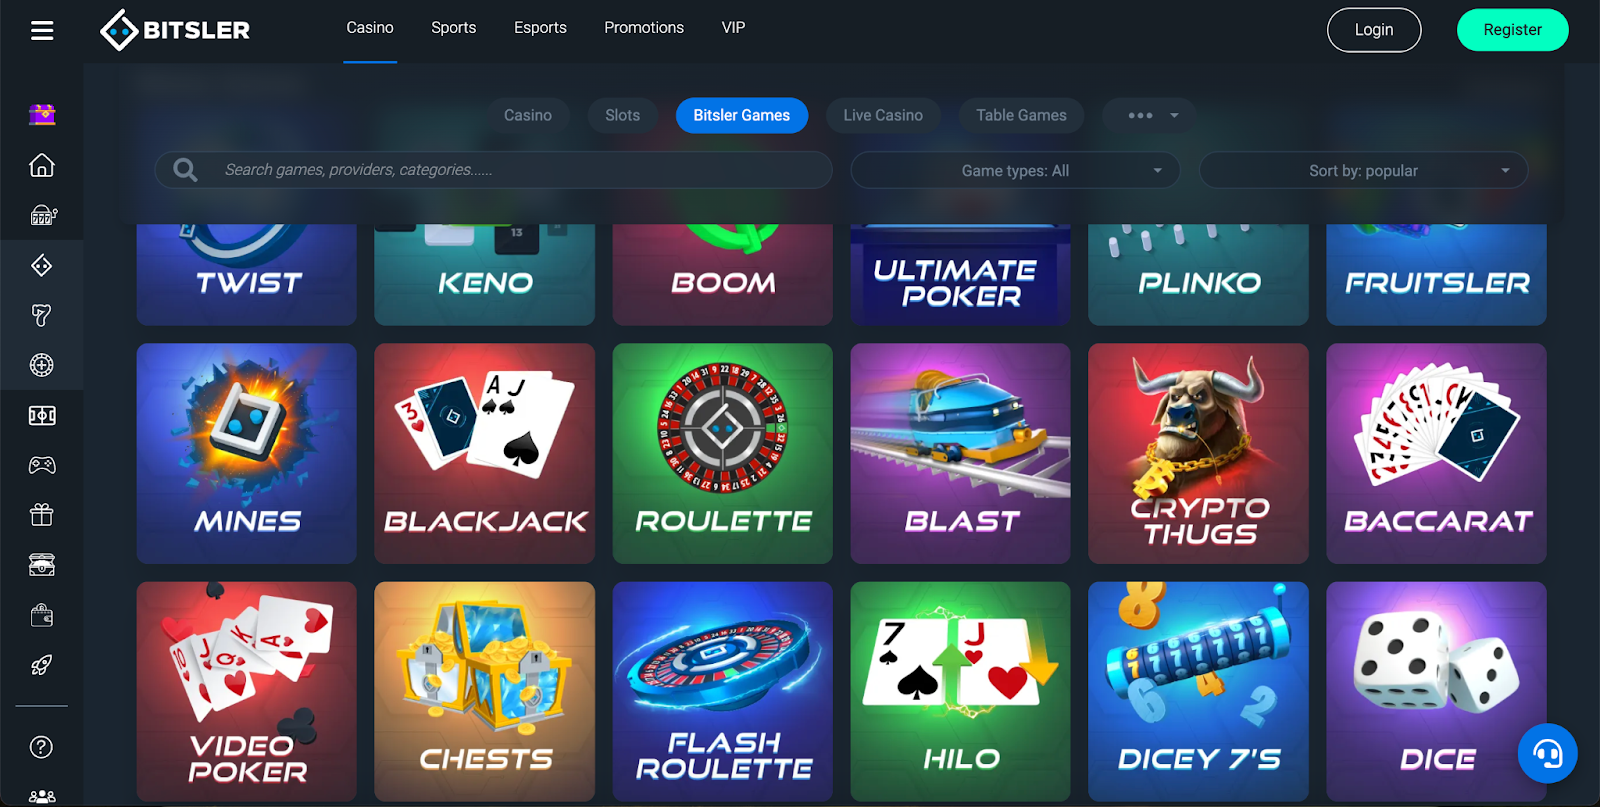 A screenshot of Bitsler Casino’s Games section.